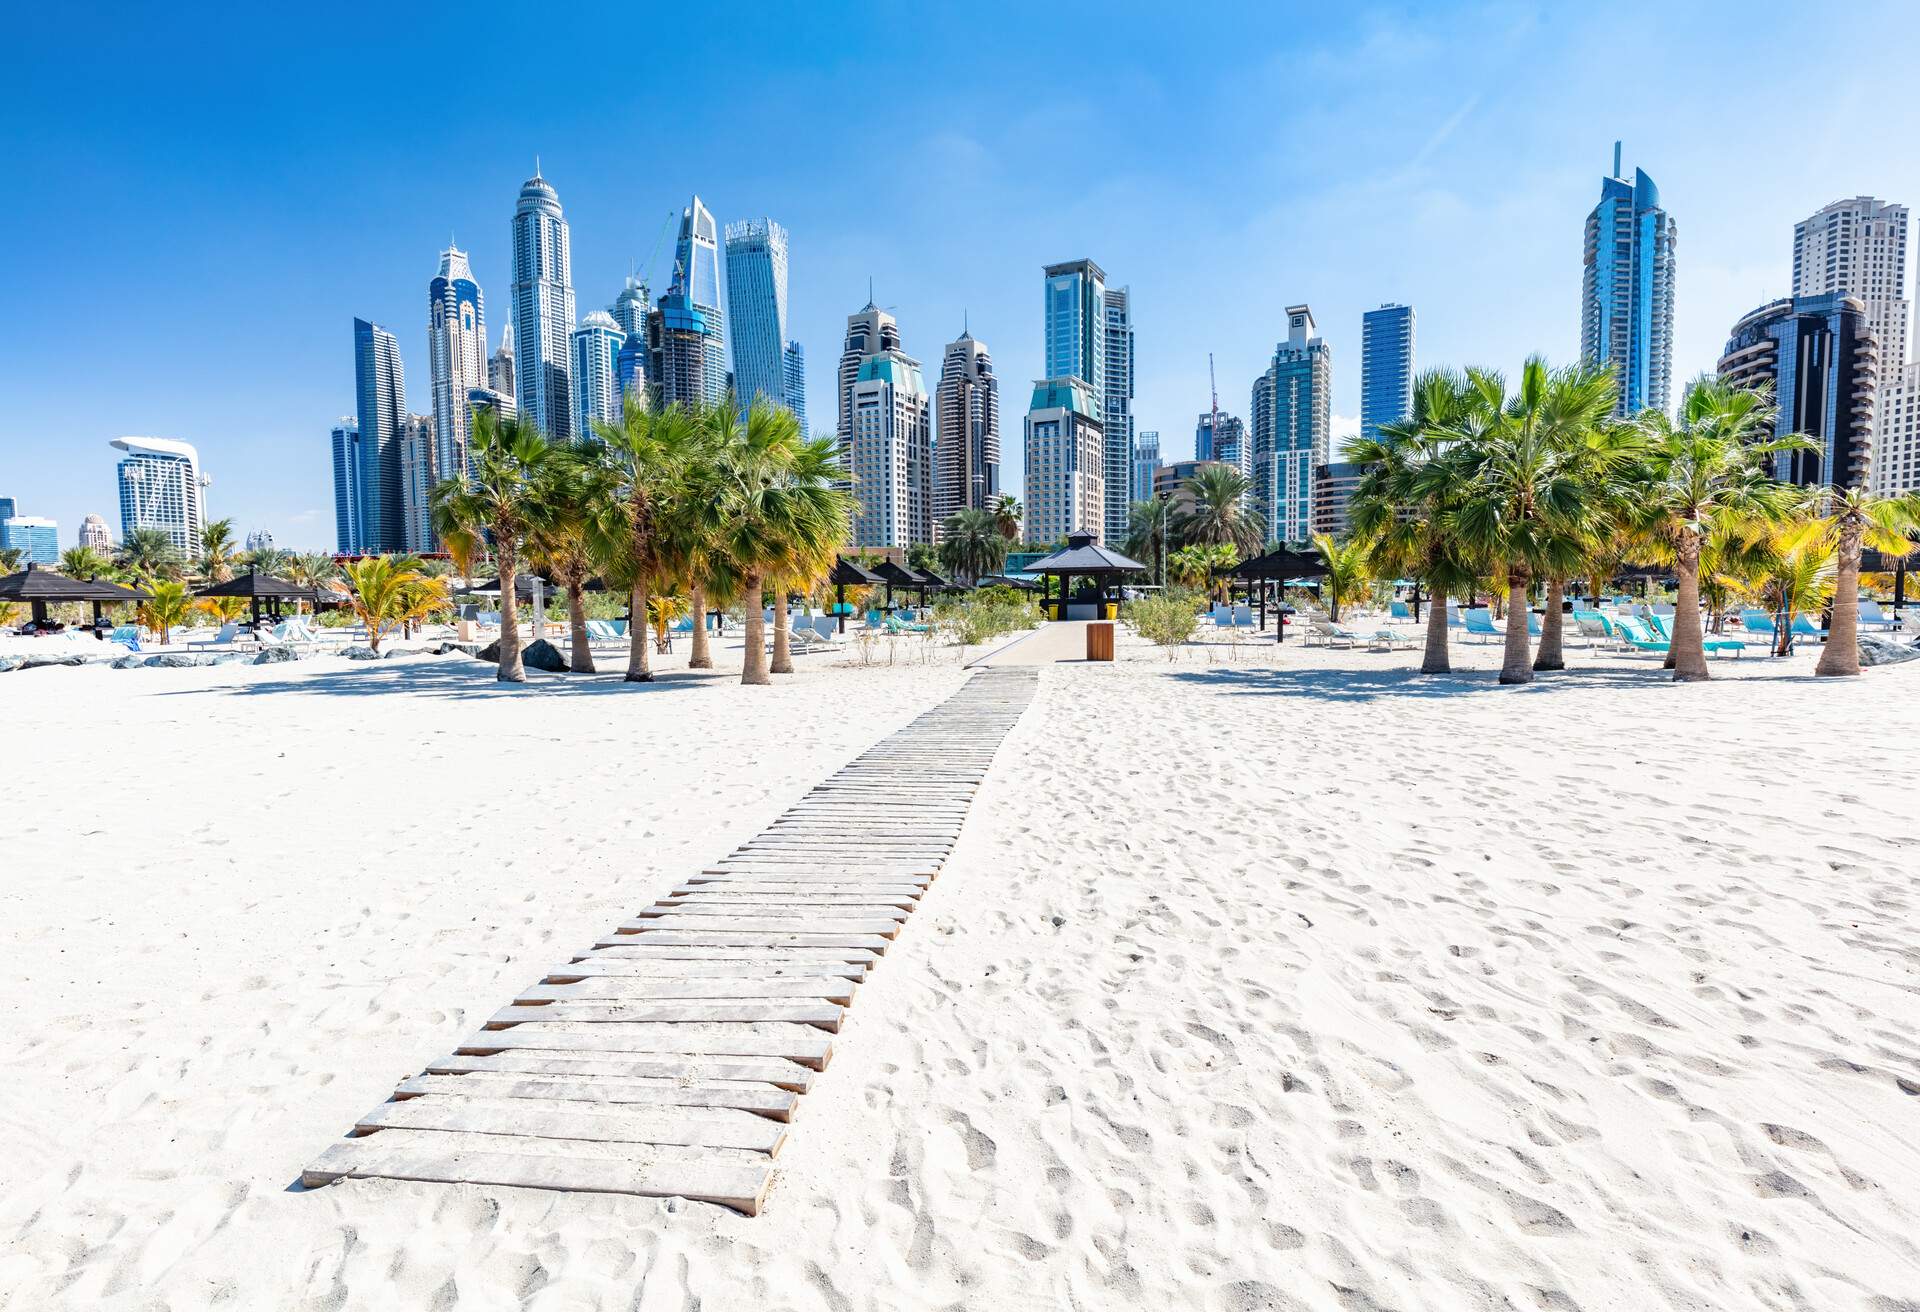 Dubai jumeirah beach with marina skyscrapers in UAE. Popular public JBR beach